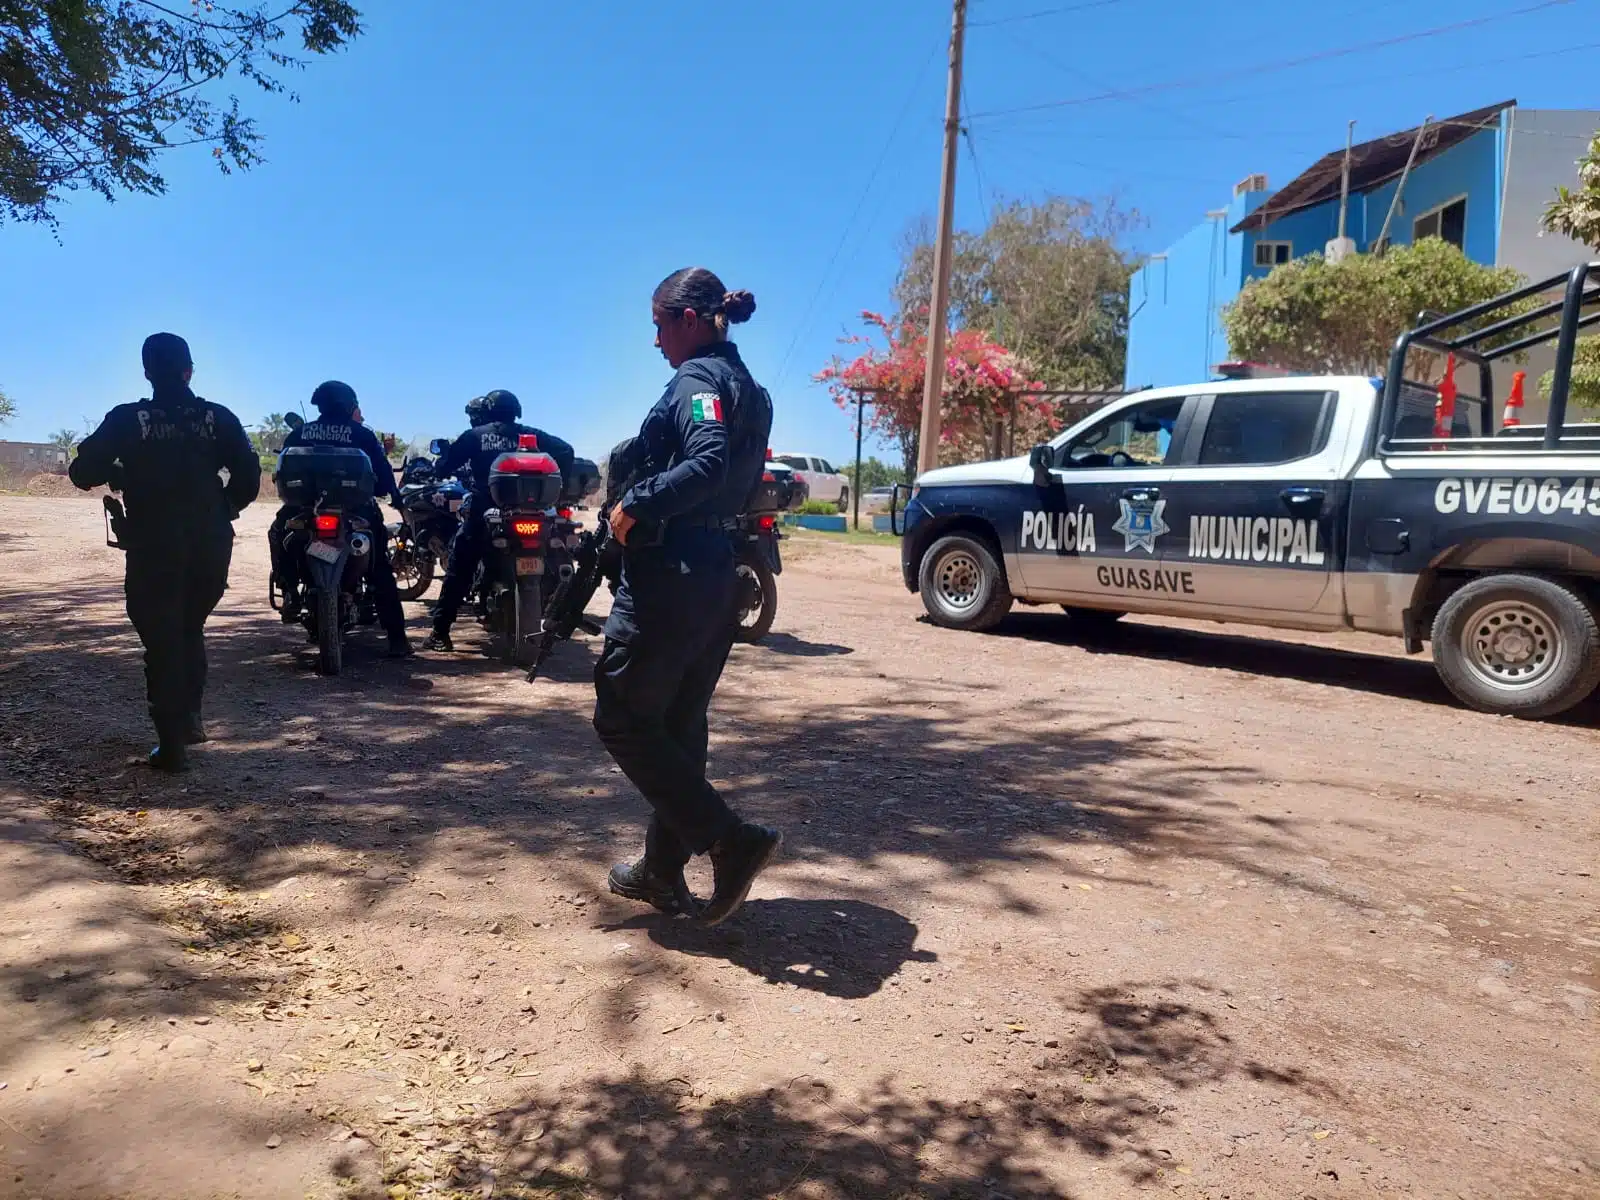 Policías de Guasave policiaca Guasave